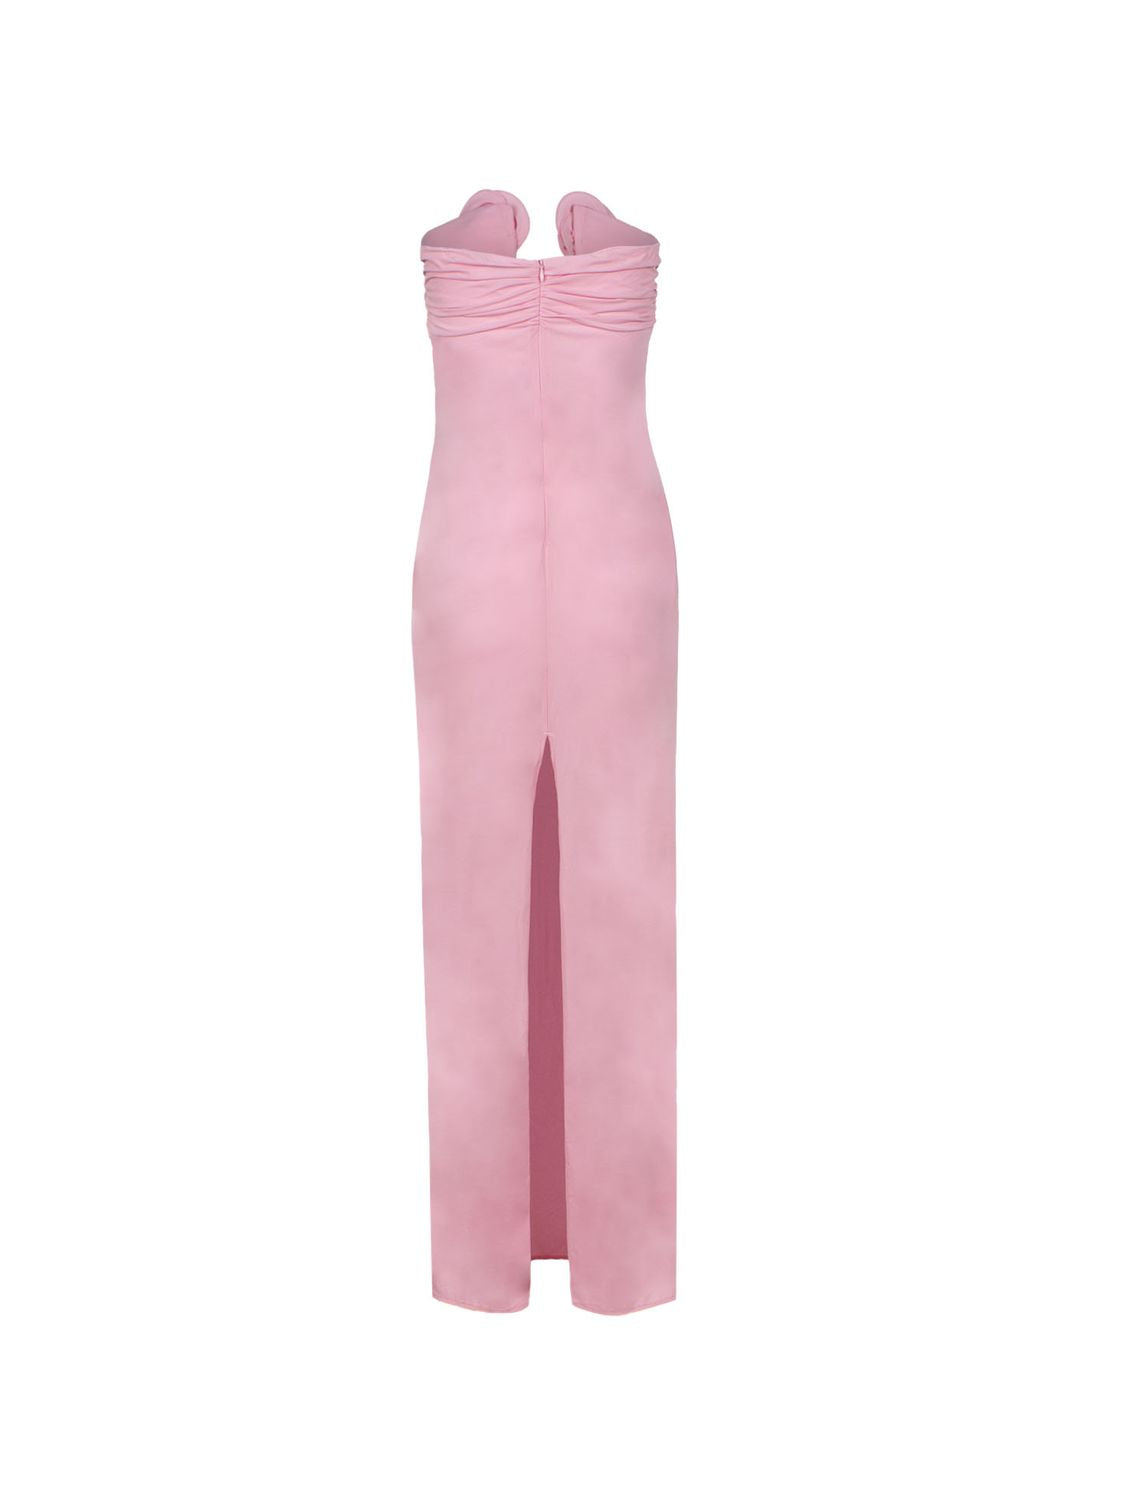 MAGDA BUTRYM Floral Appliqué Strapless Maxi Dress in Bubblegum Pink for Women